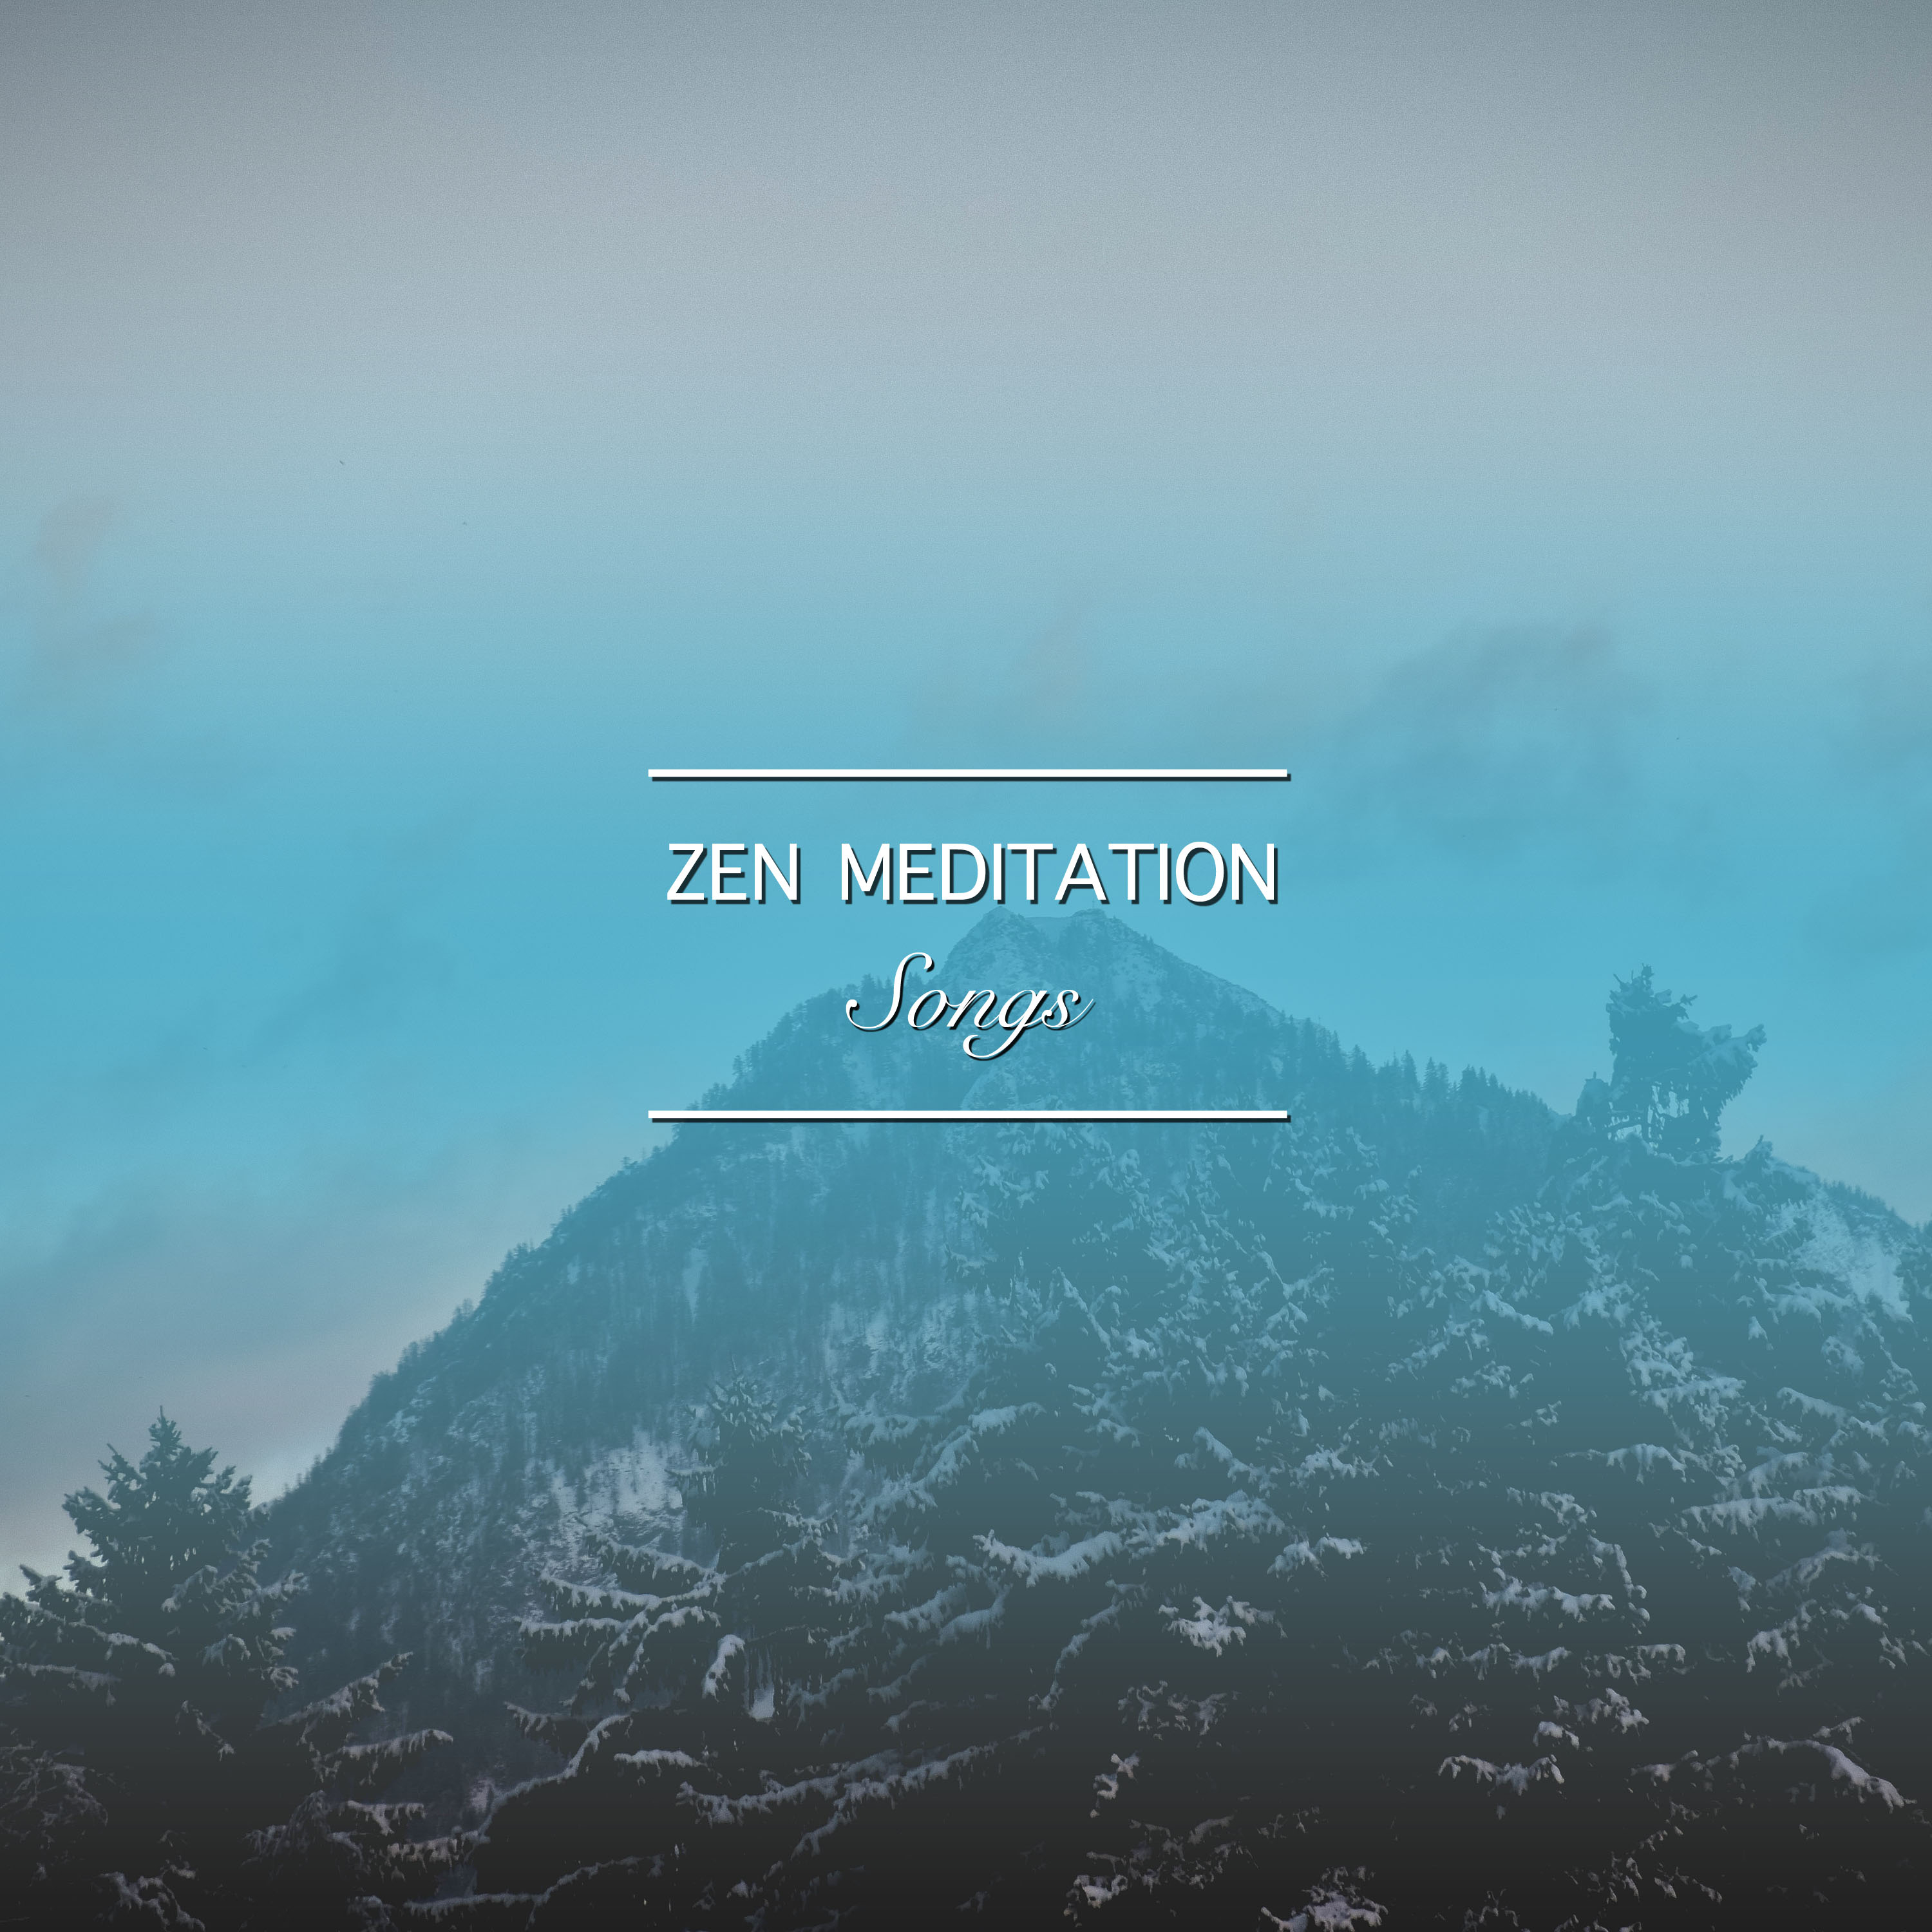 12 Zen Meditation Songs